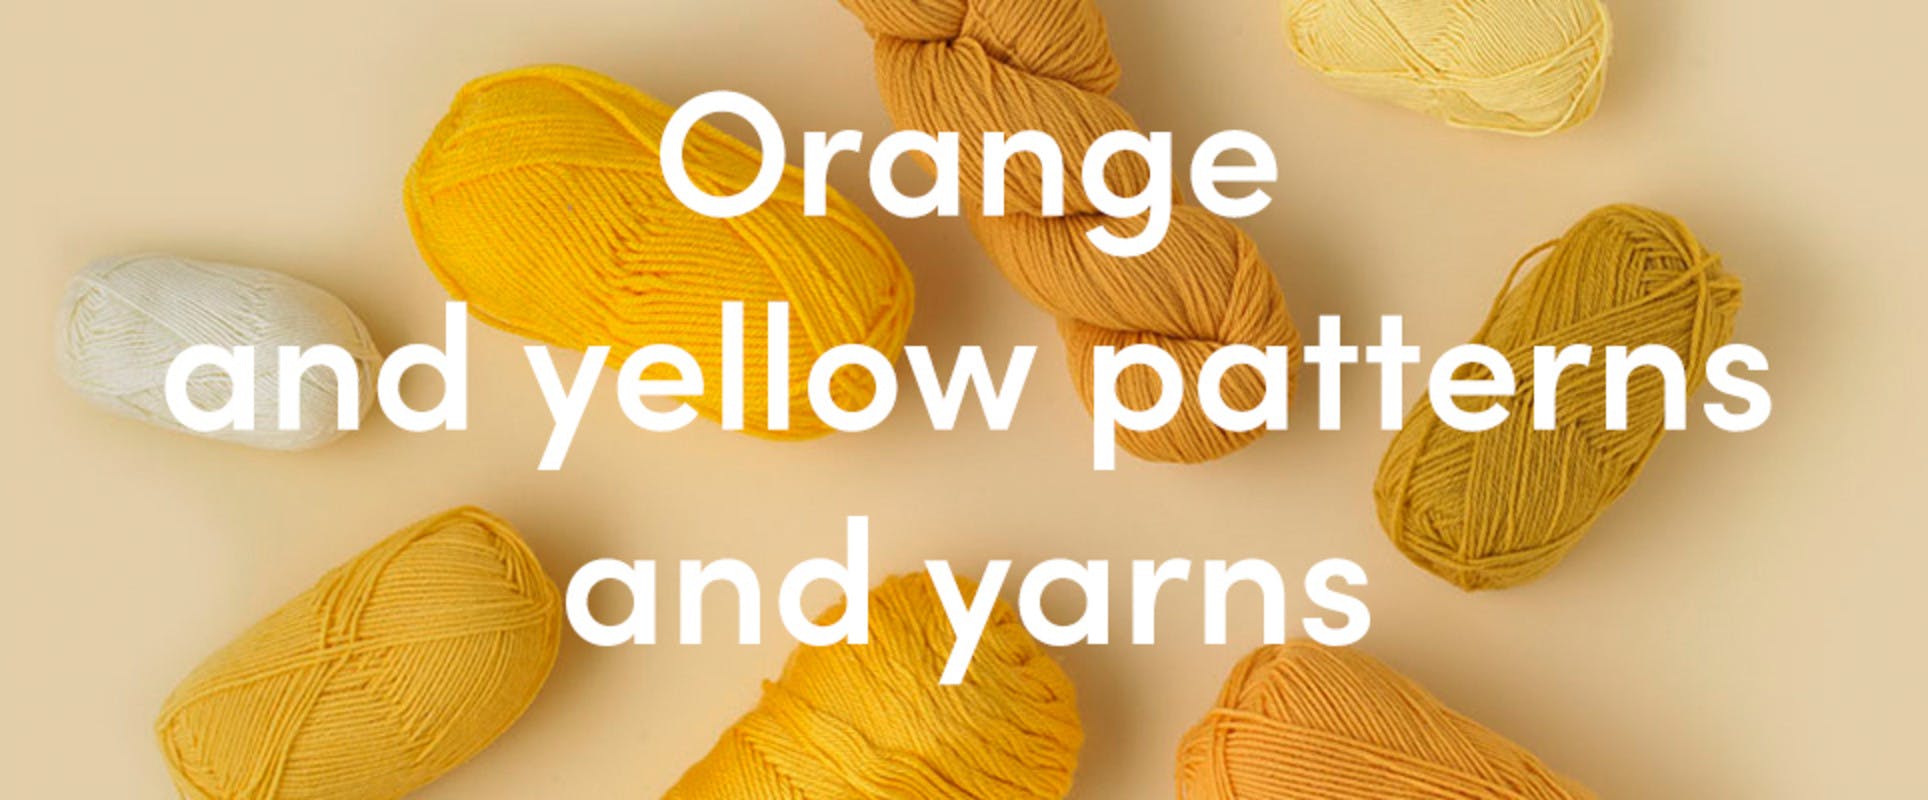 Canary Yellow Releases New Fluorescent Orange Caps